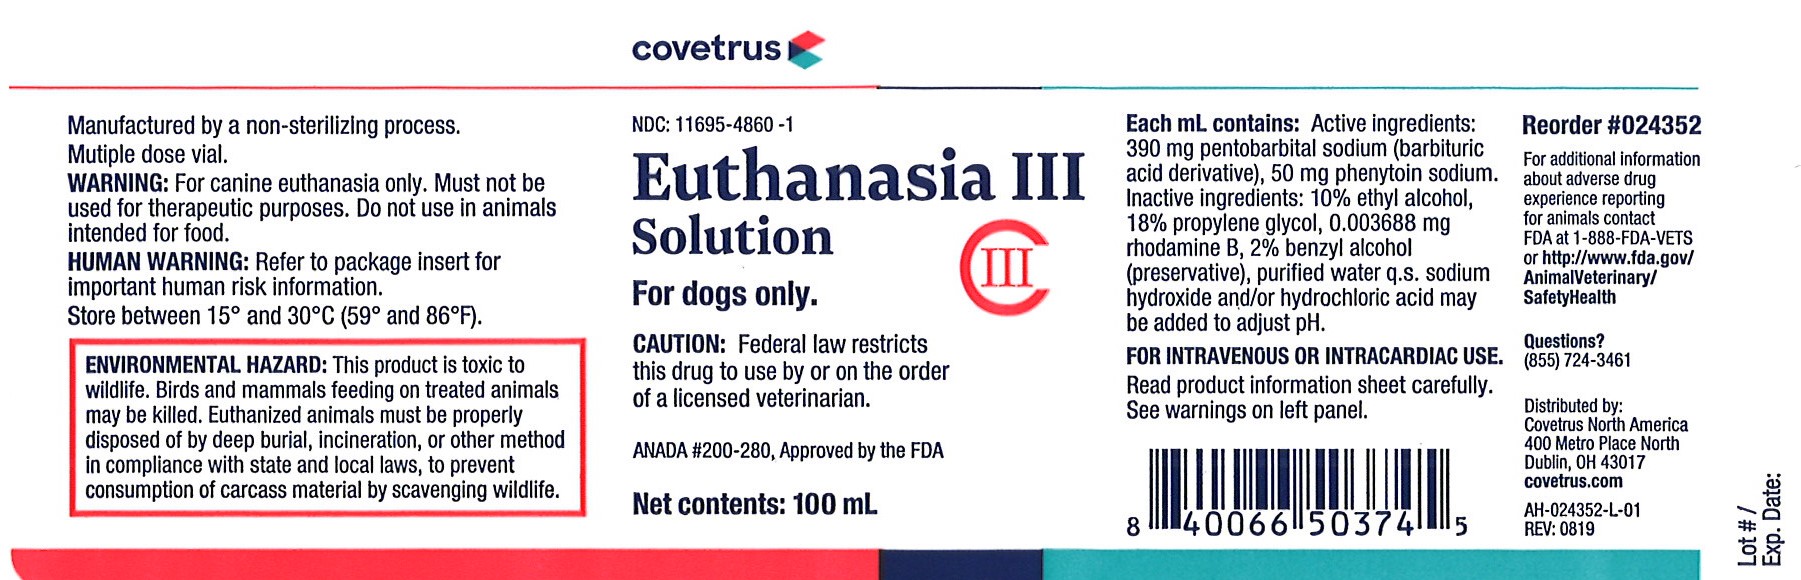 Euthanasia III Solution Covetrus Label